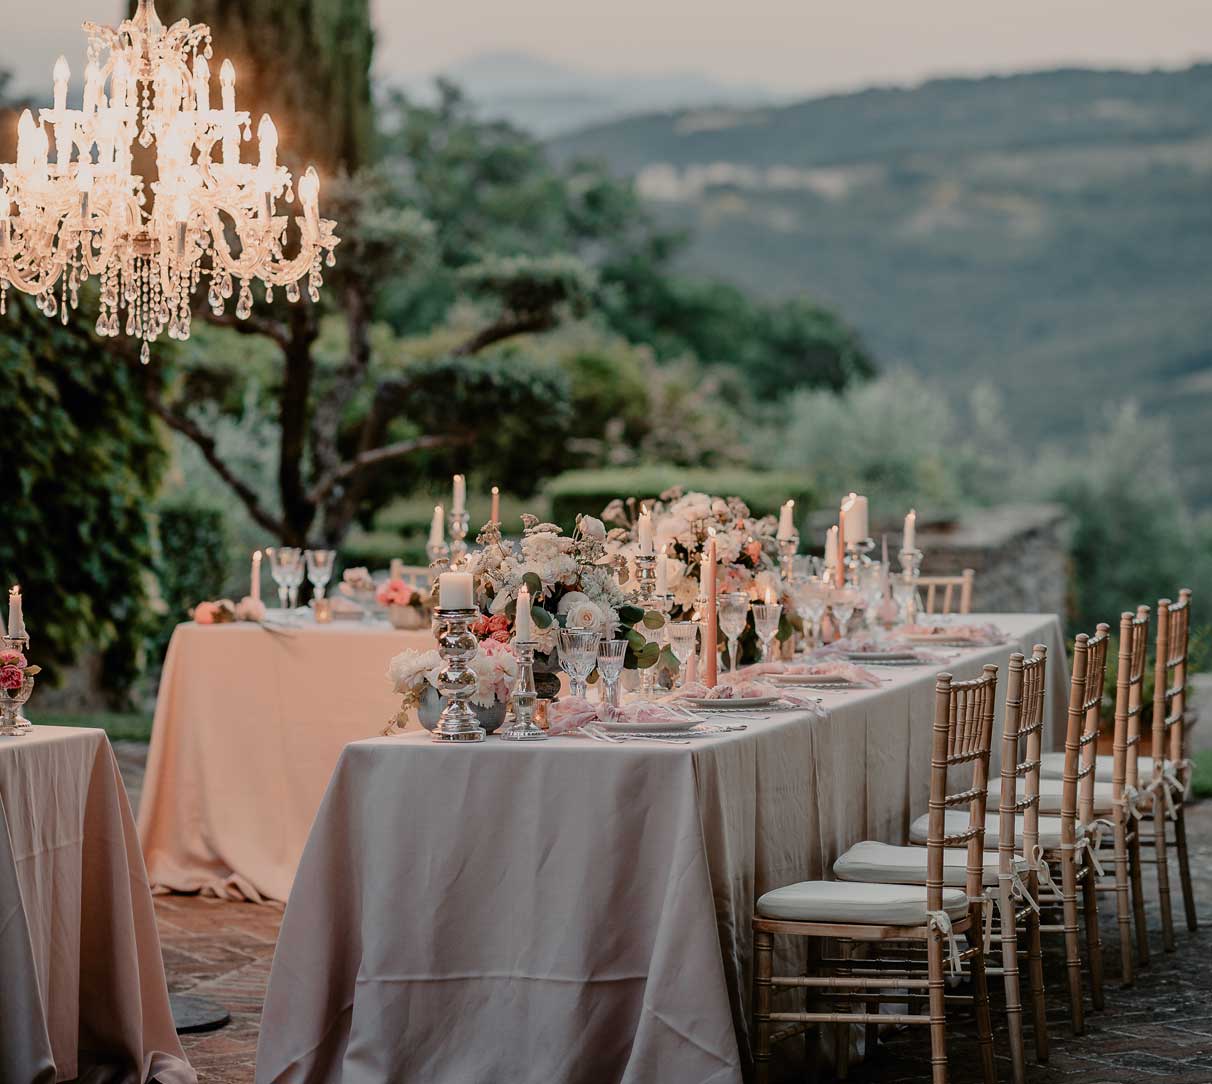 Panorama wedding table - al fresco wedding dinner in Umbria - wedding coordinator in Italy - Dream on wedding planner Italy